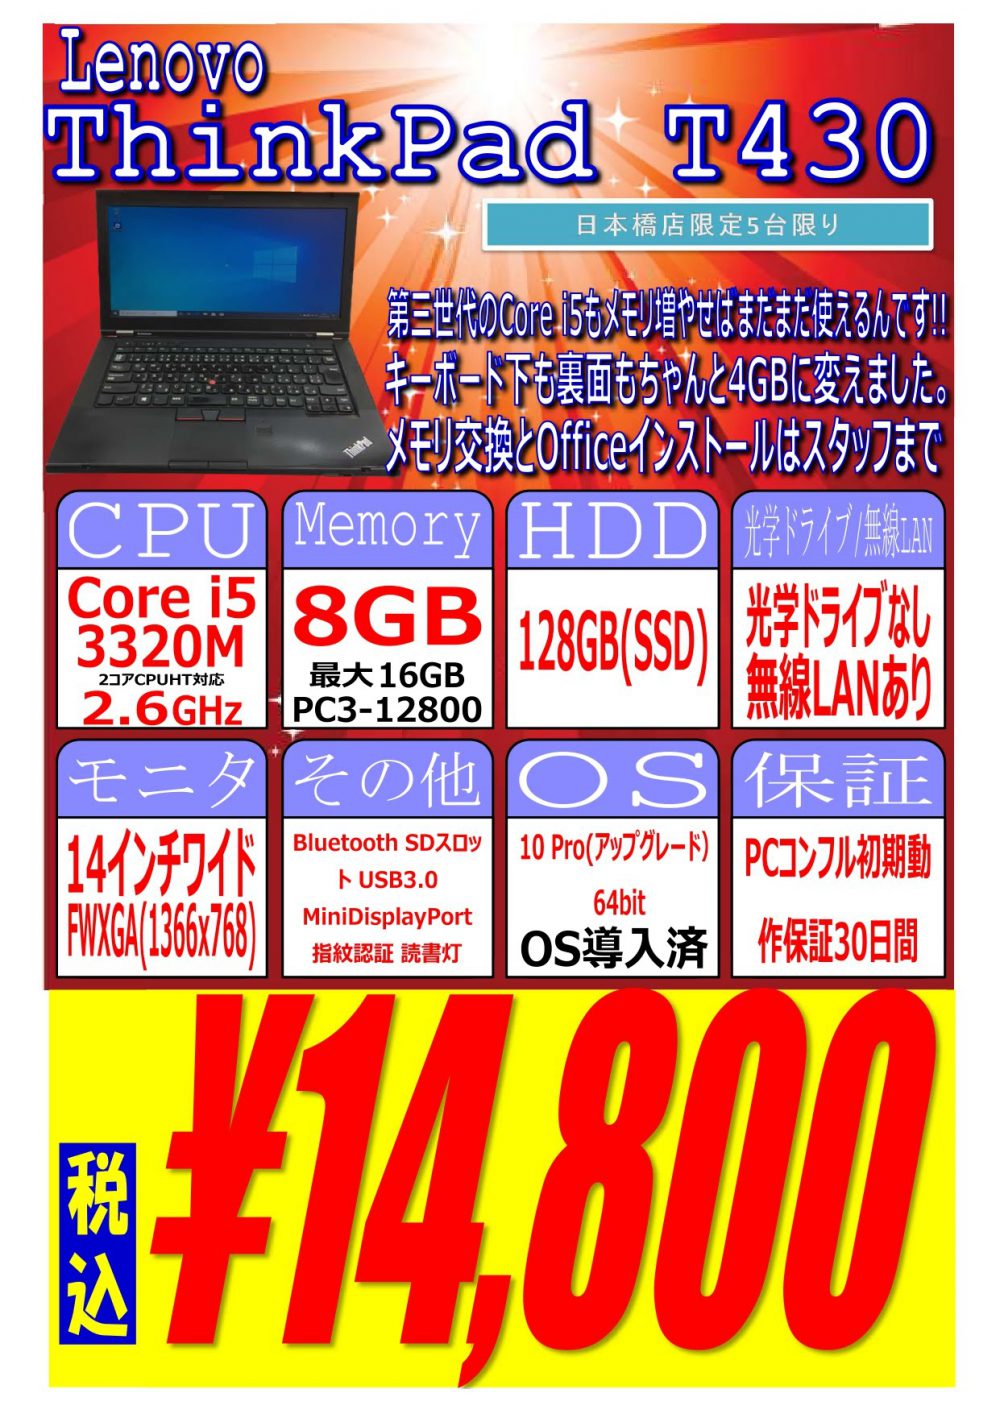 PCコンフル日本橋店でThinkPad T430が14,800円！読者限定プレゼントも